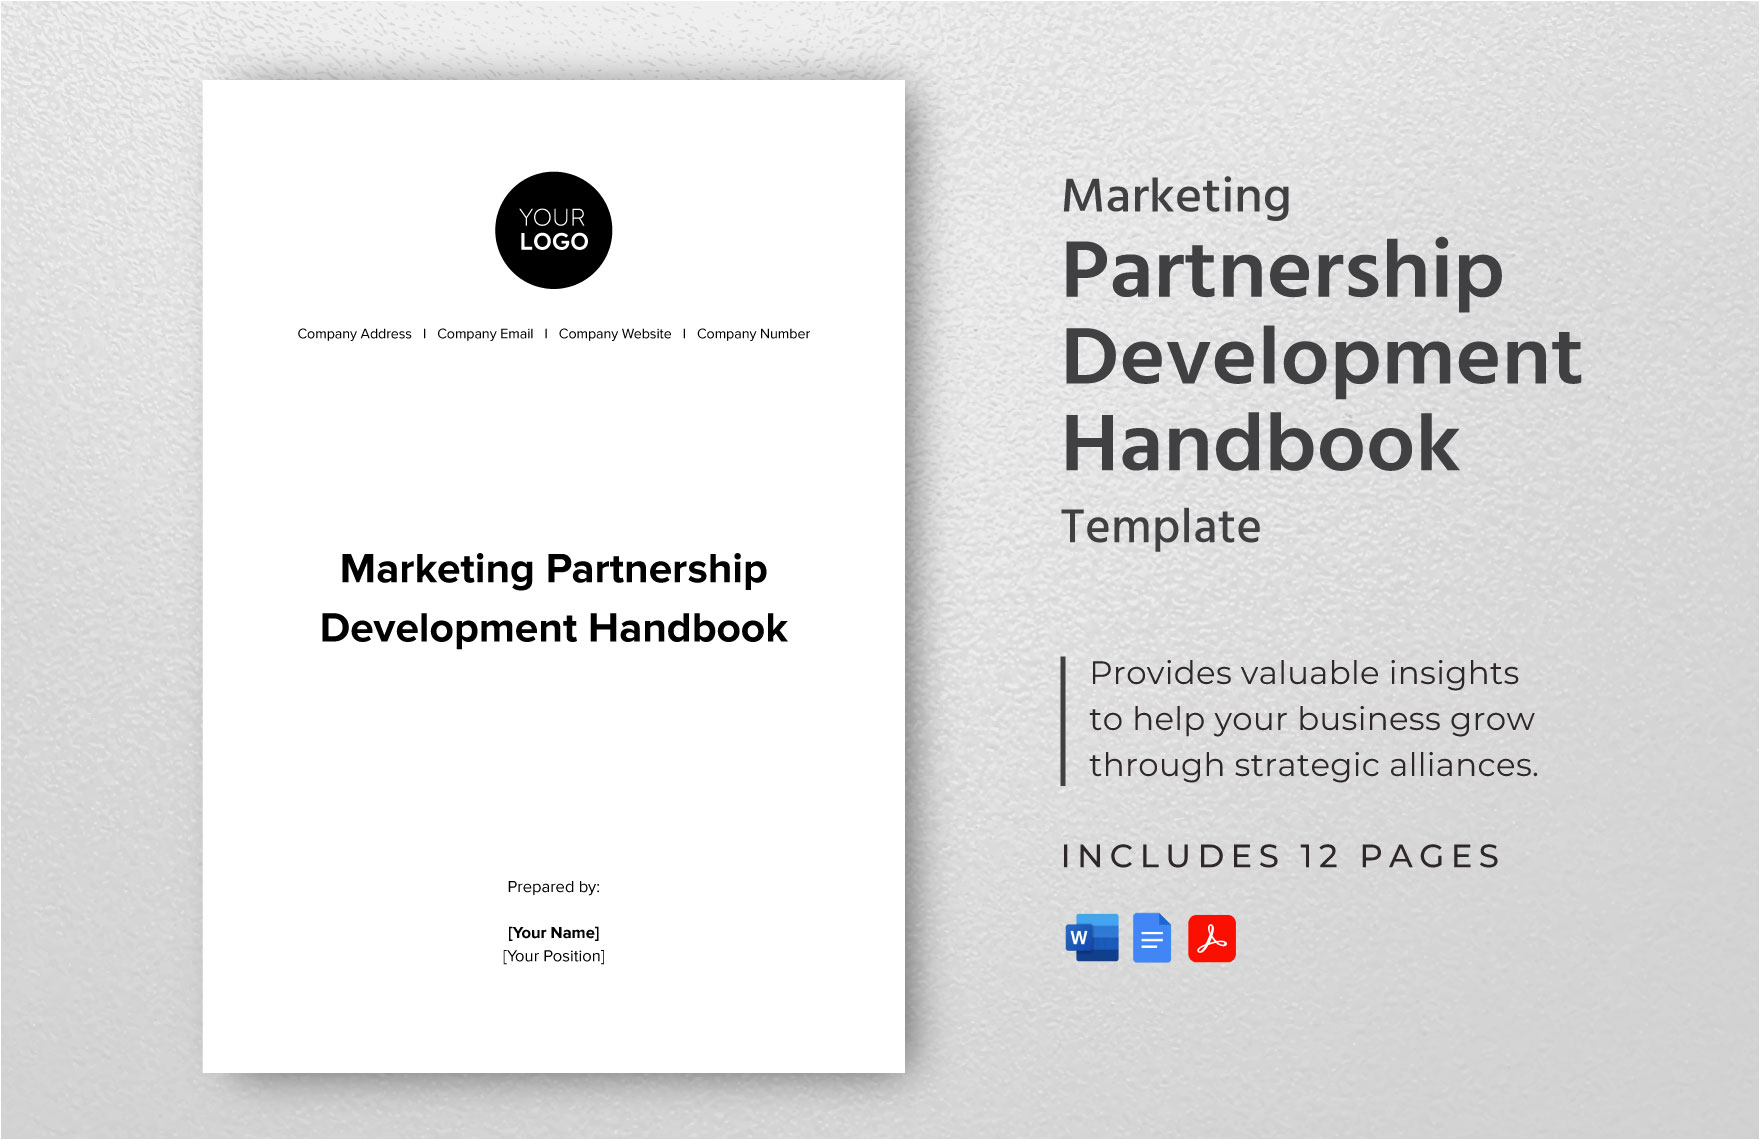 Marketing Partnership Development Handbook Template